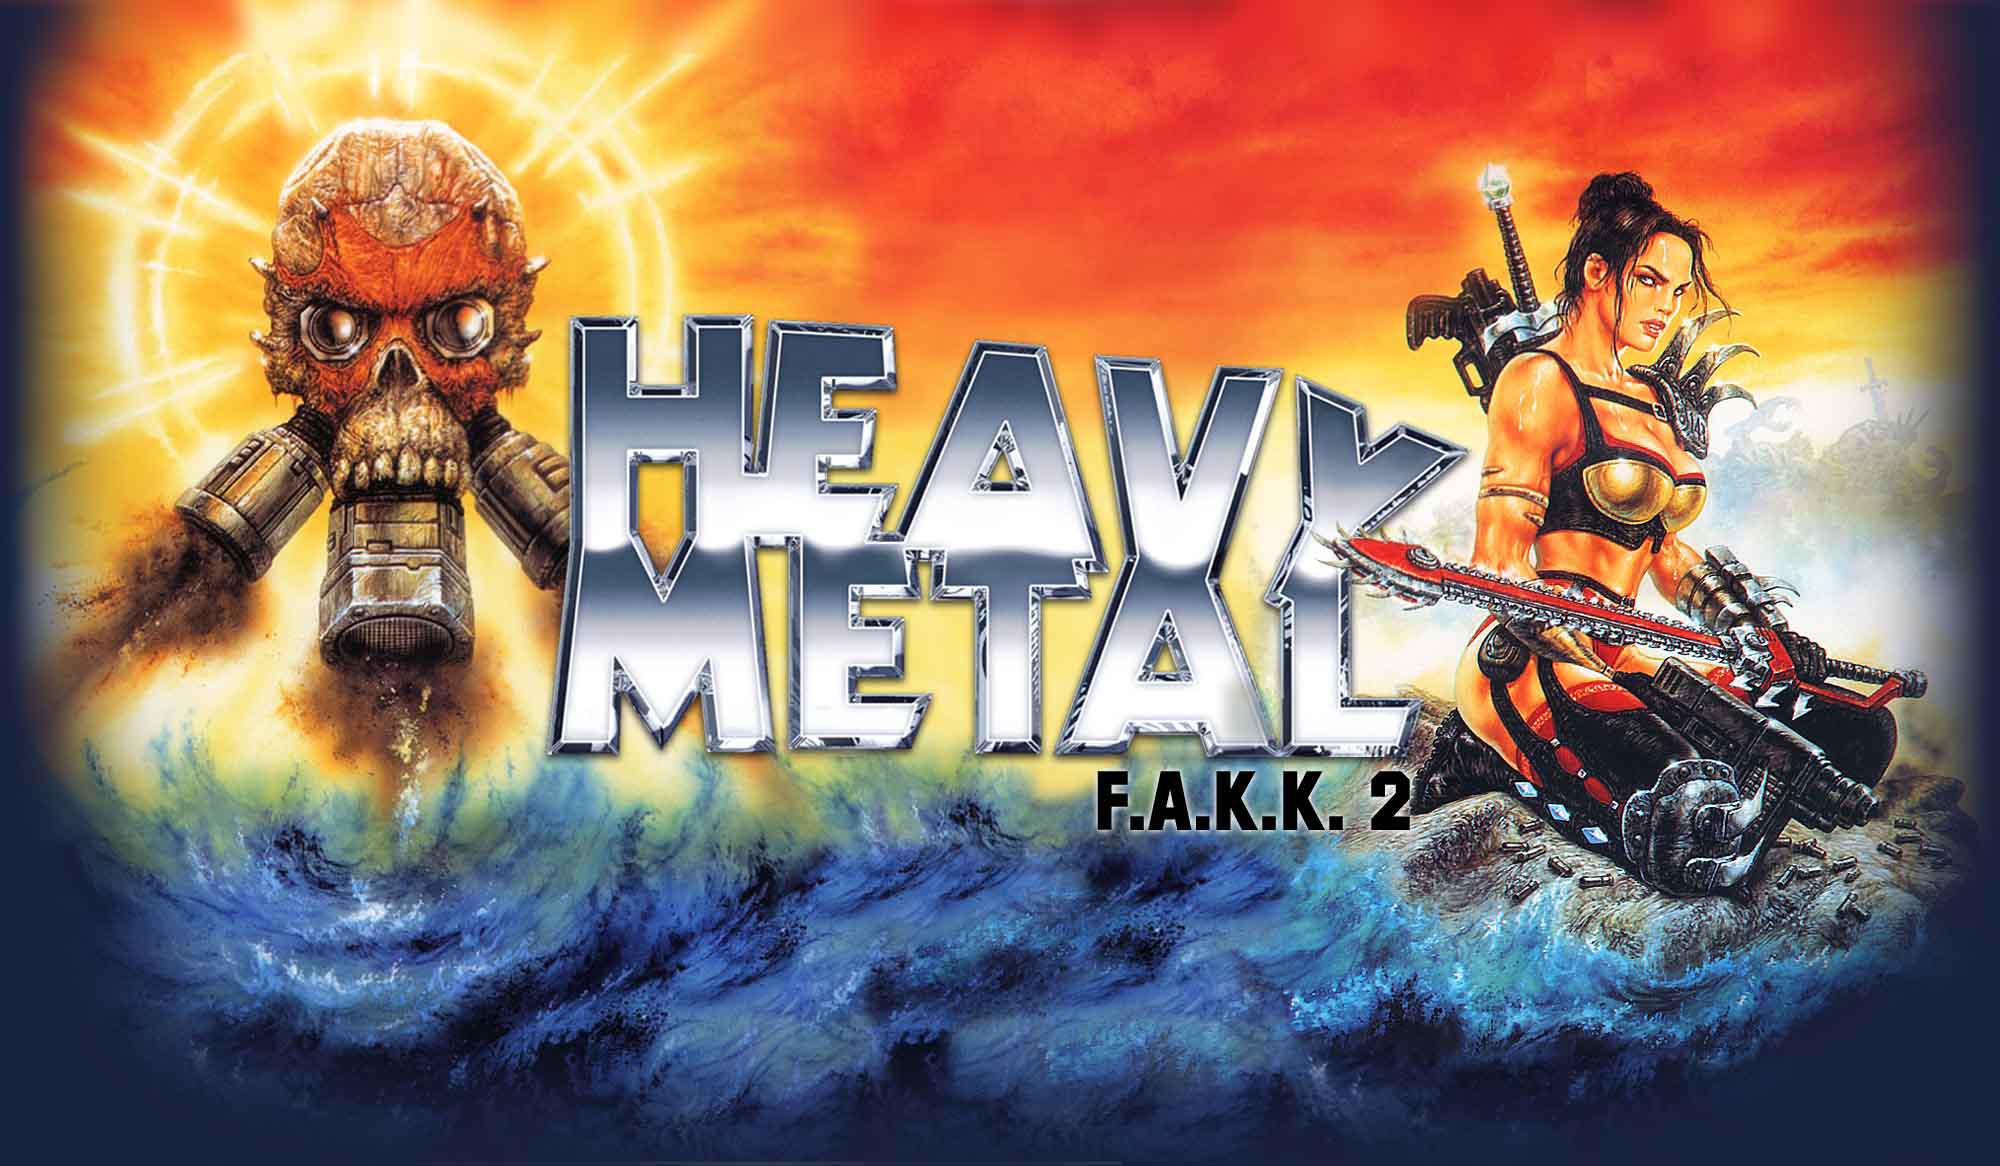 Heavy Metal Movie Wallpaper